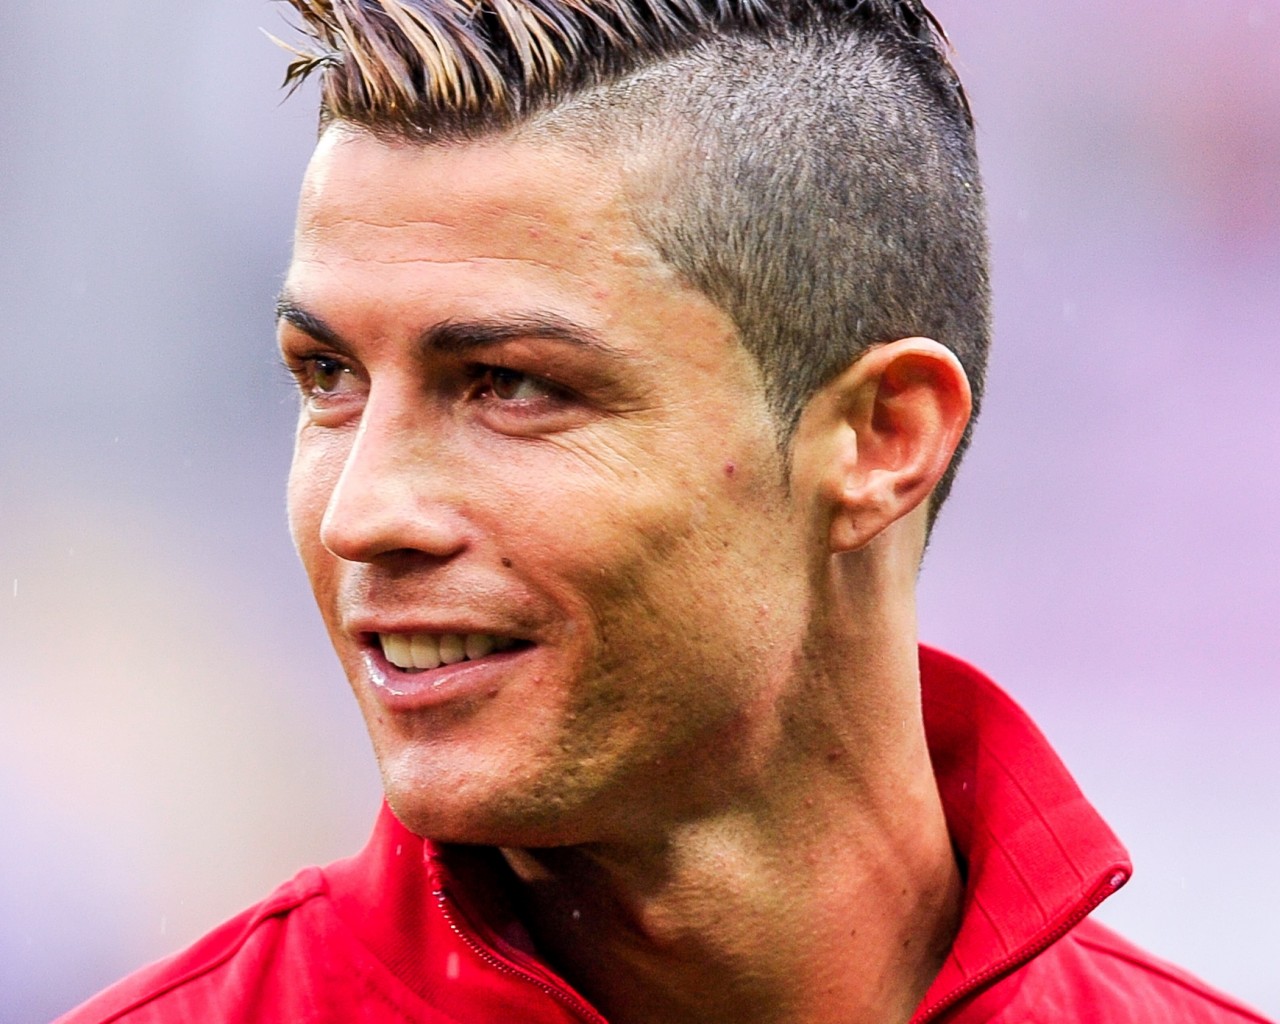 Cristiano Ronaldo 2014 haircut wallpaper - Cristiano Ronaldo Wallpapers